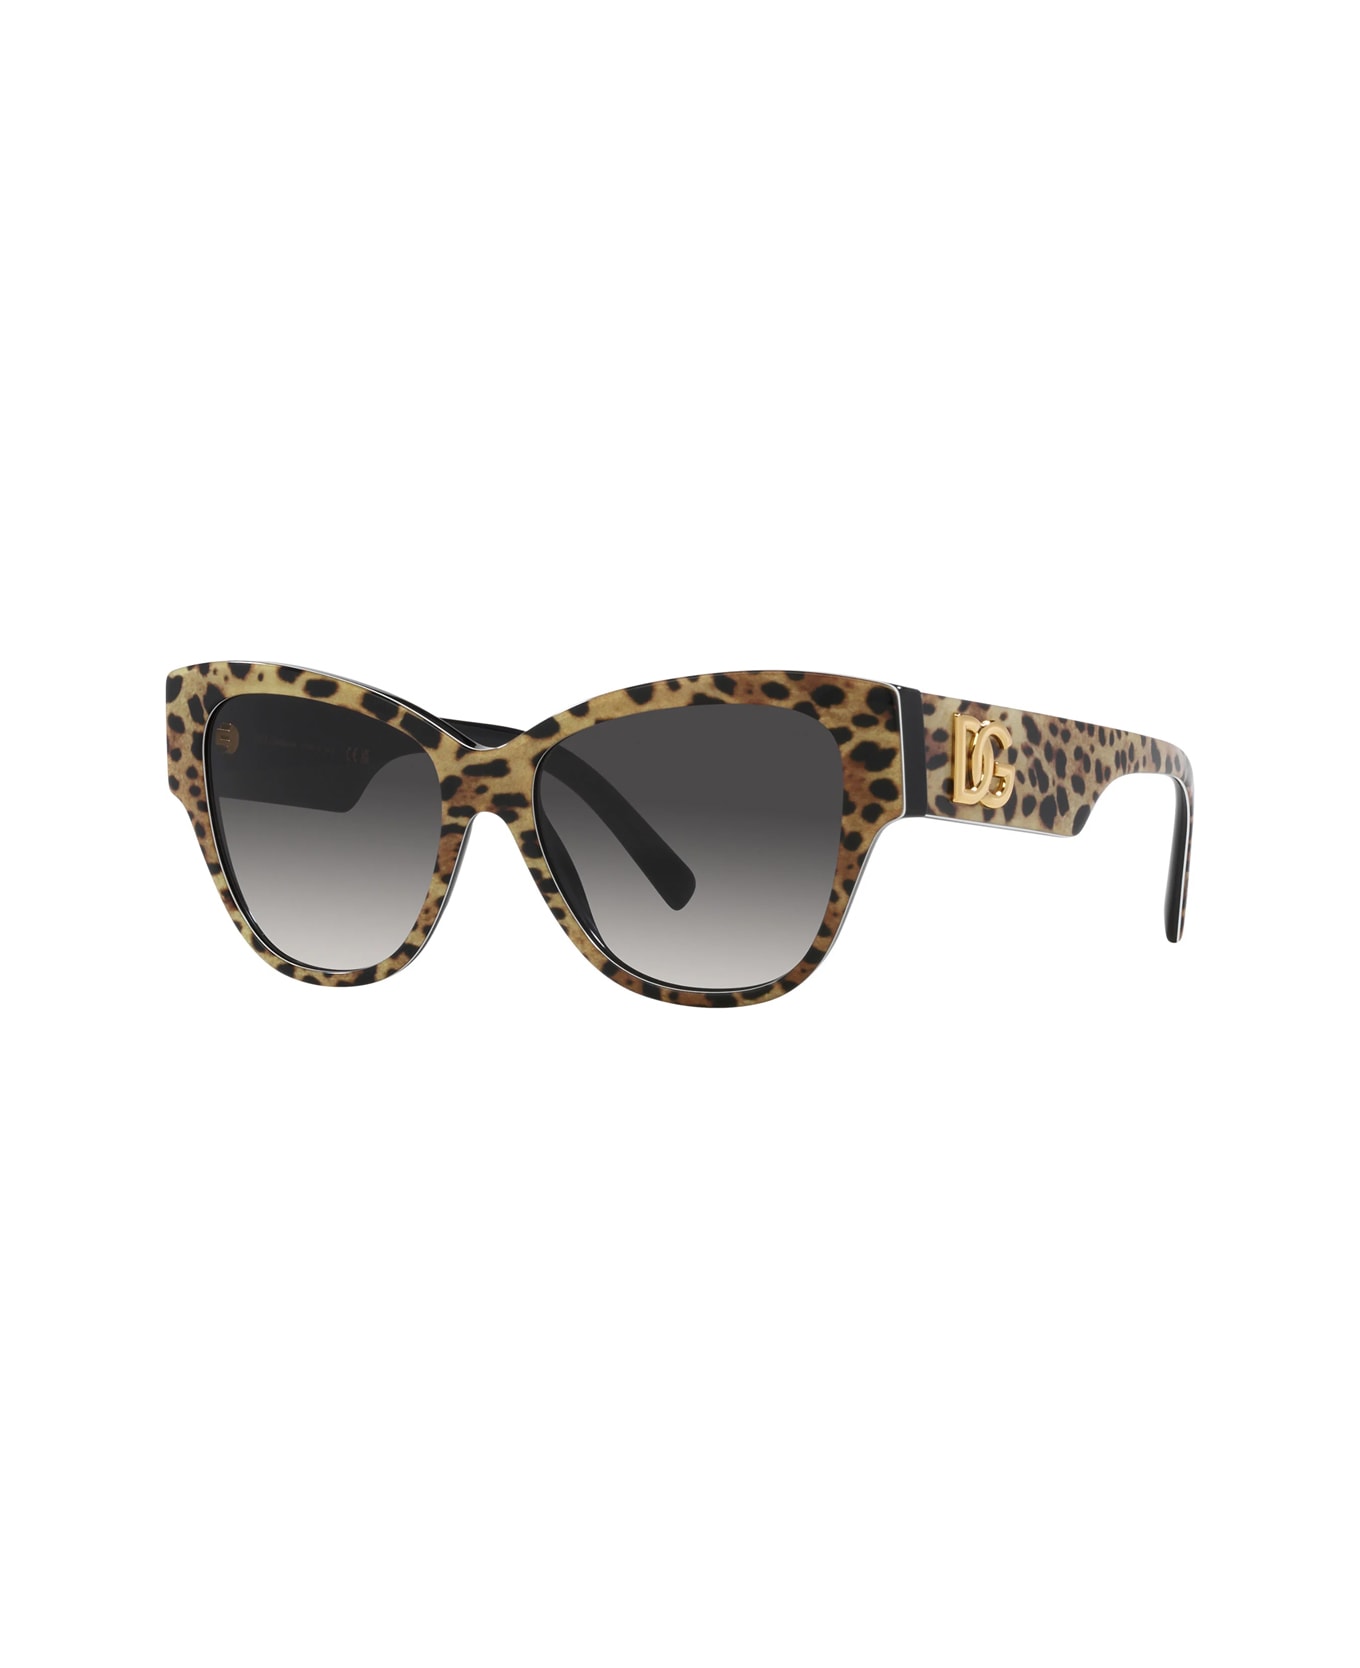 Dolce & Gabbana Eyewear Dg4449 31638g Sunglasses - Beige サングラス